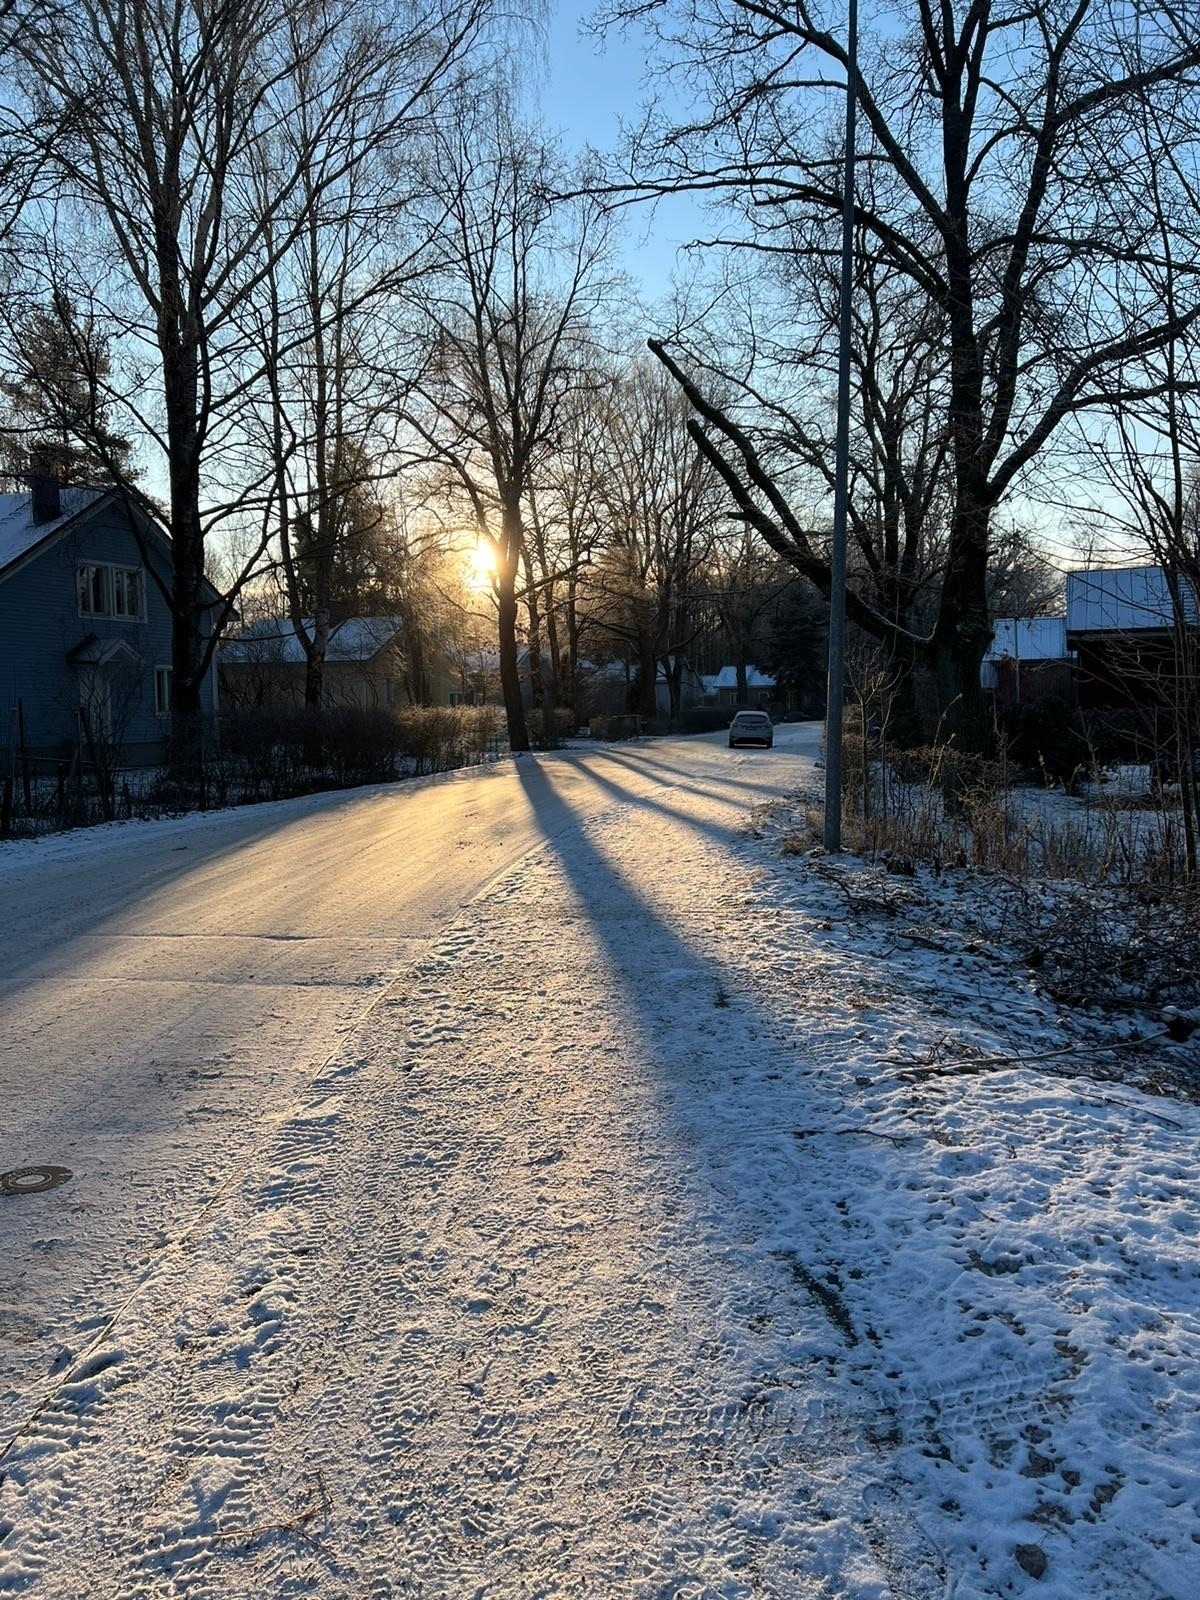 sun peeking through trees, shadows laid on snowy street